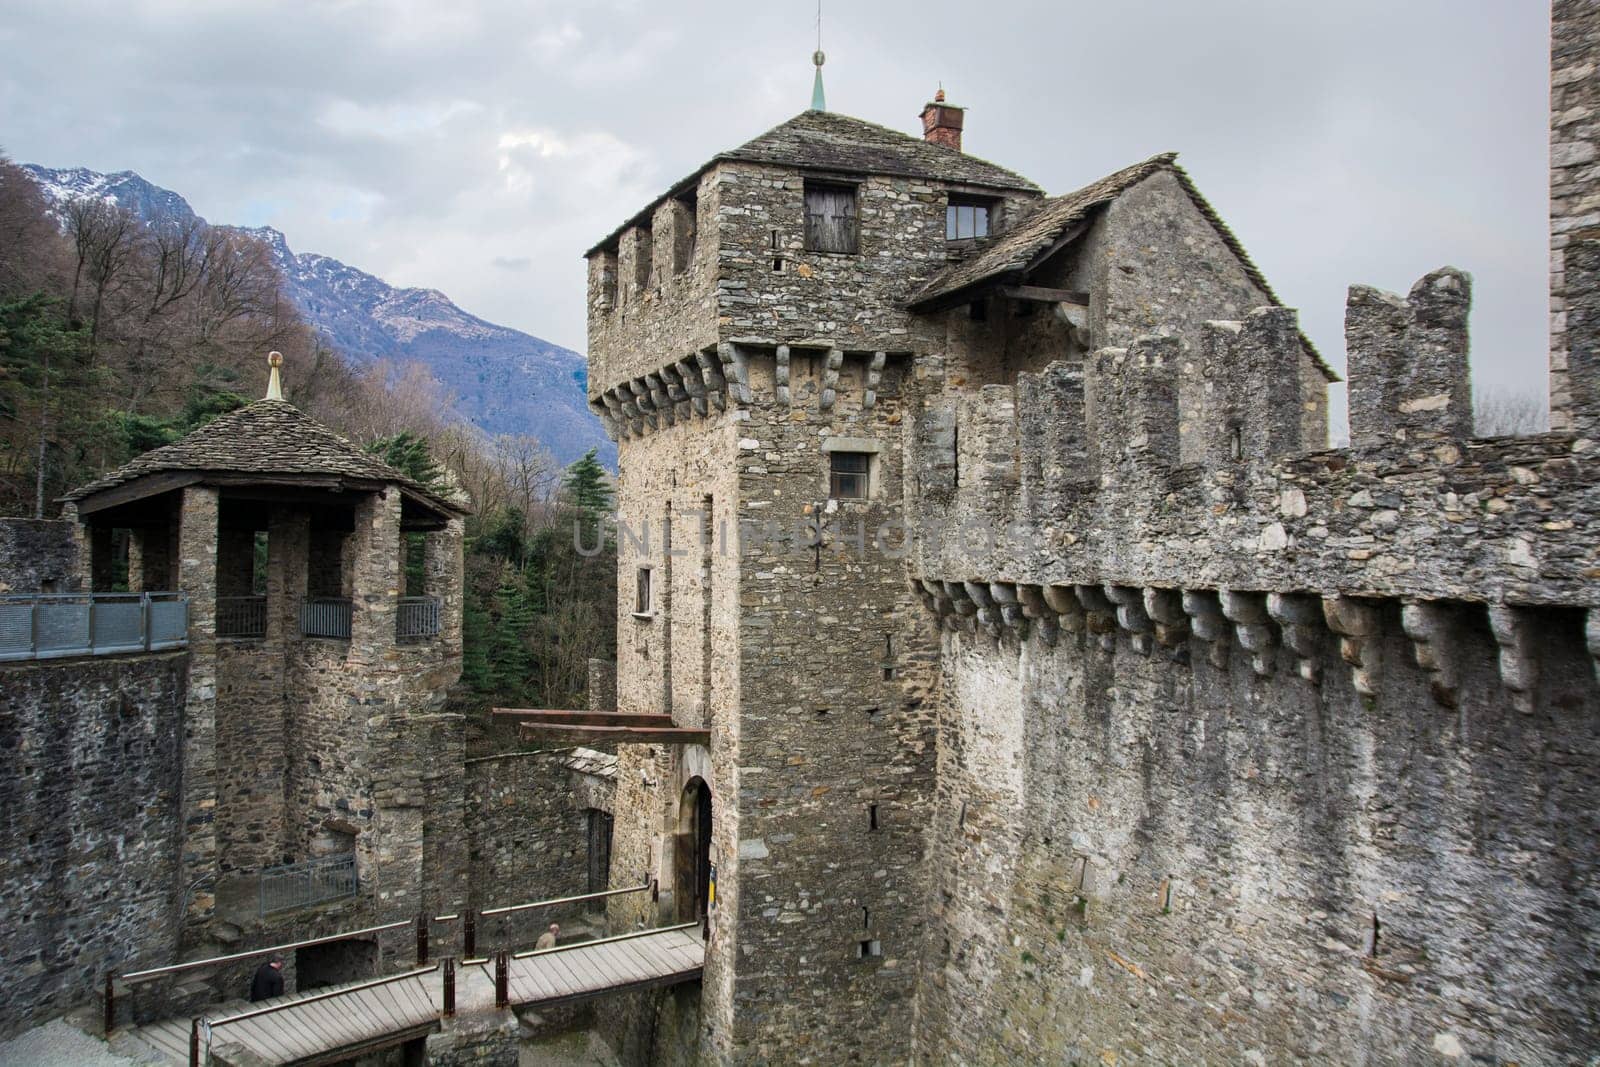 A stone castle with a bridge going through it. Photo of a medieval stone castle with a bridge crossing through it in Bellinzona, Switzerland